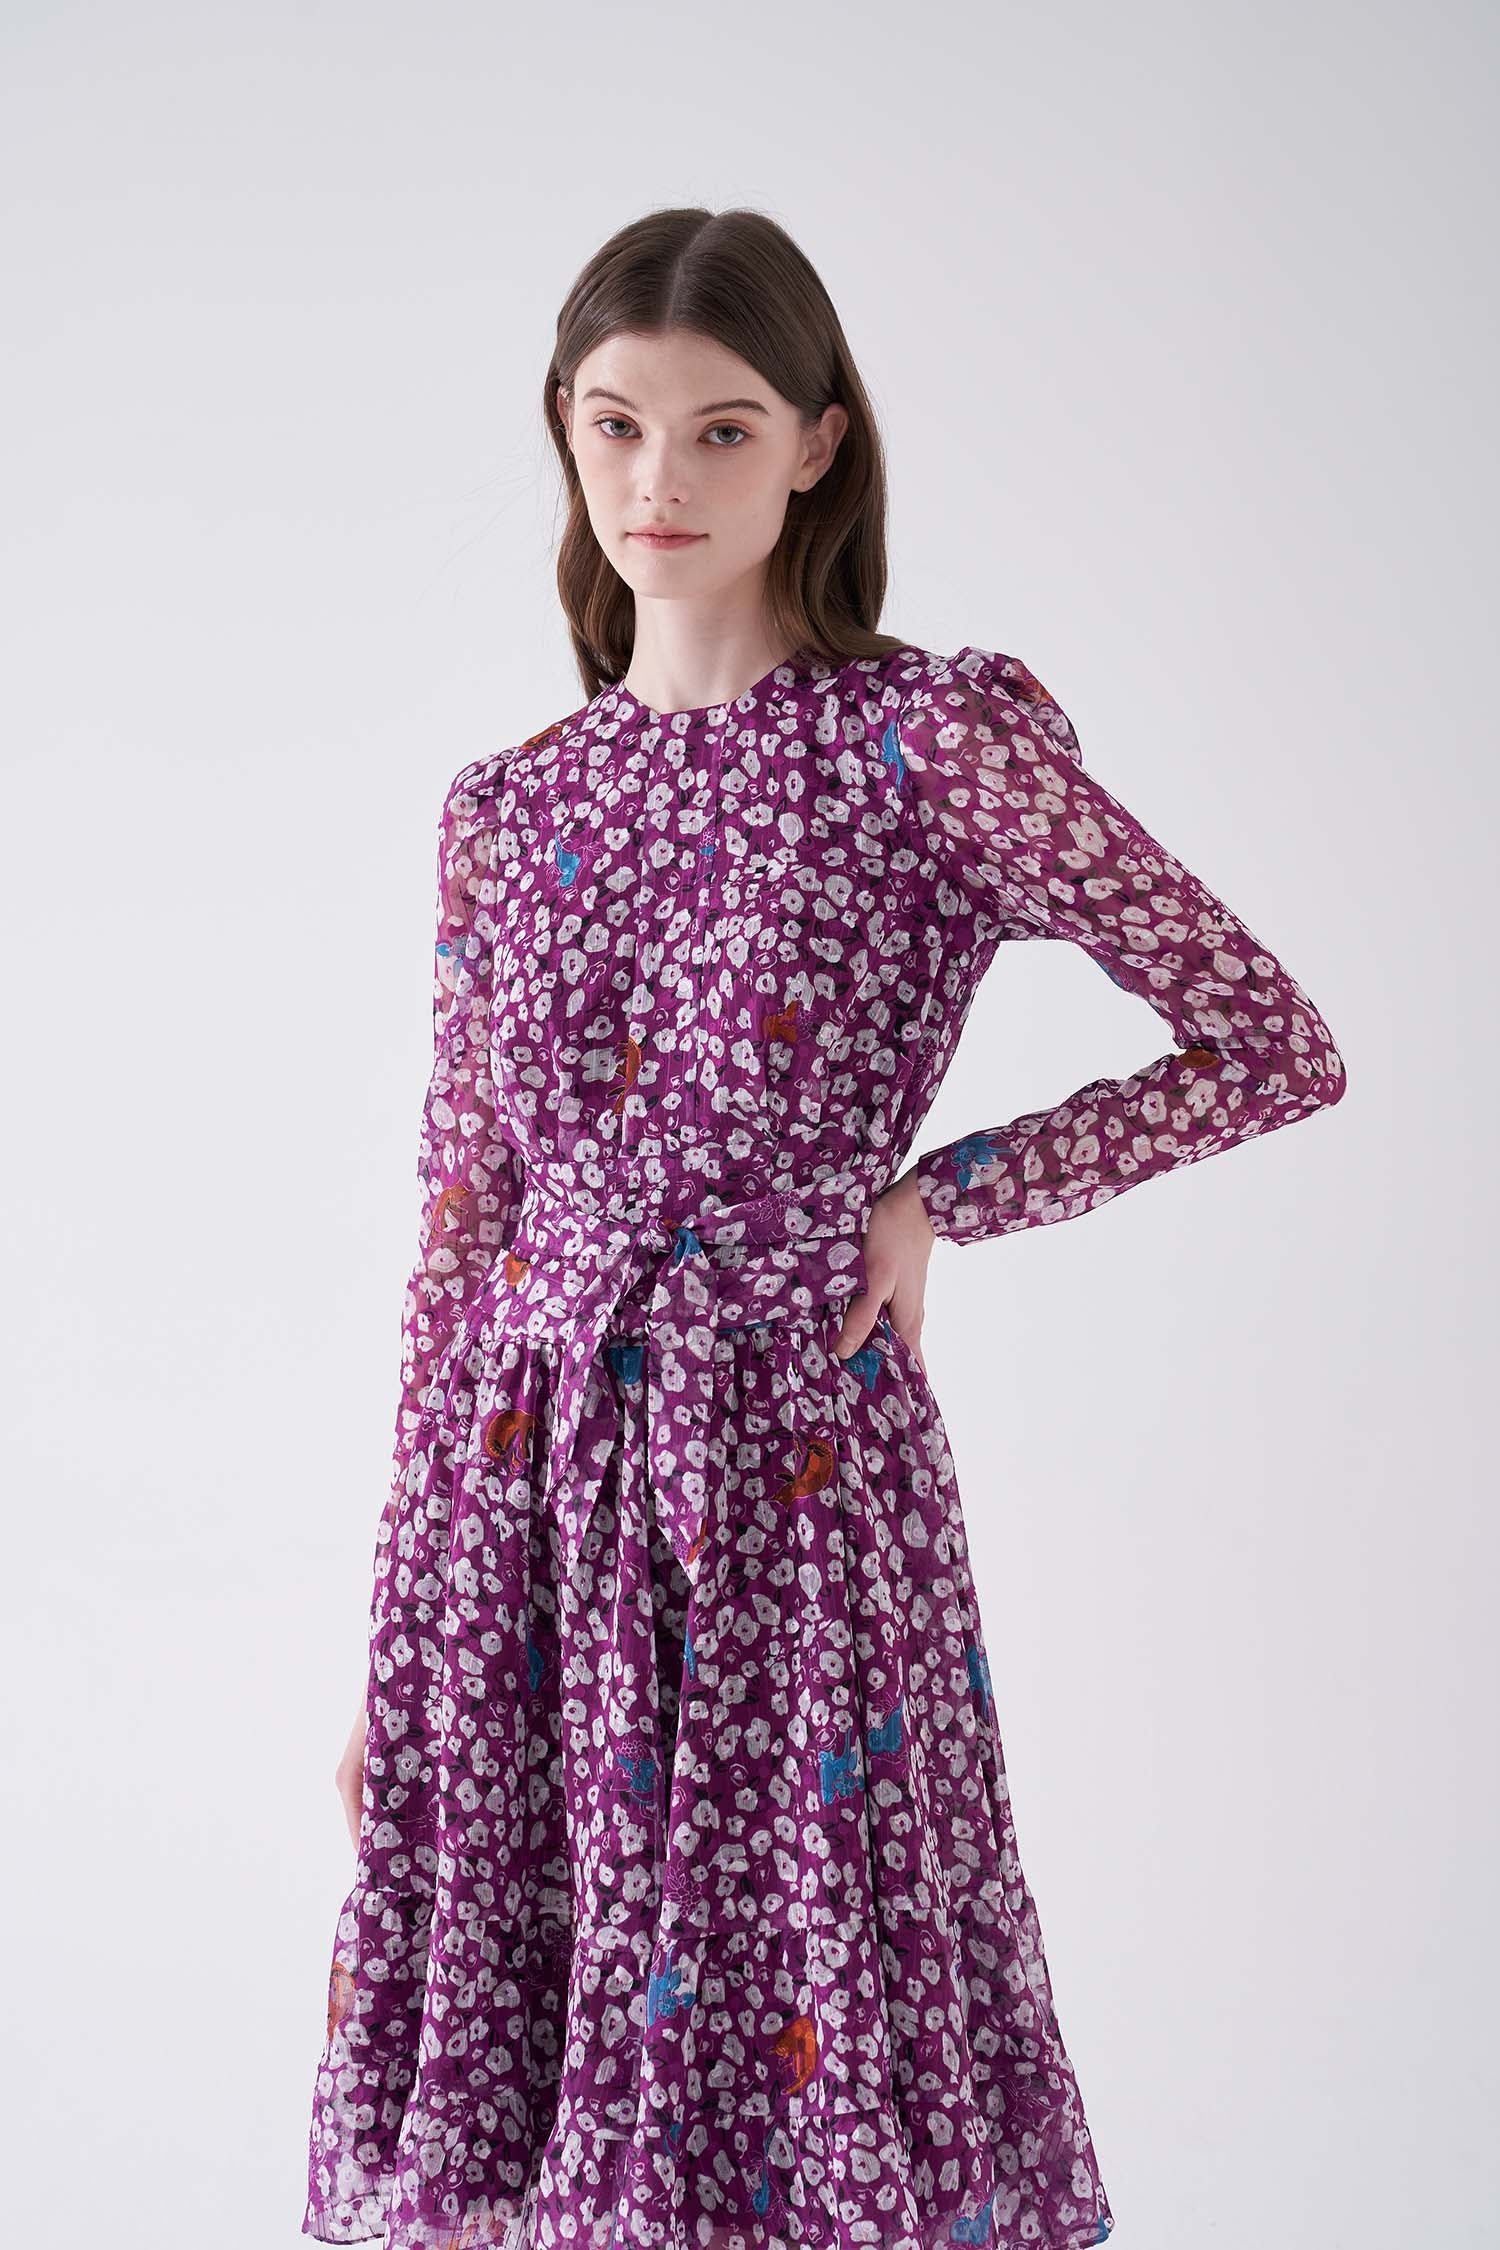 Nora Noh Magenta Floral Dress - Dresses